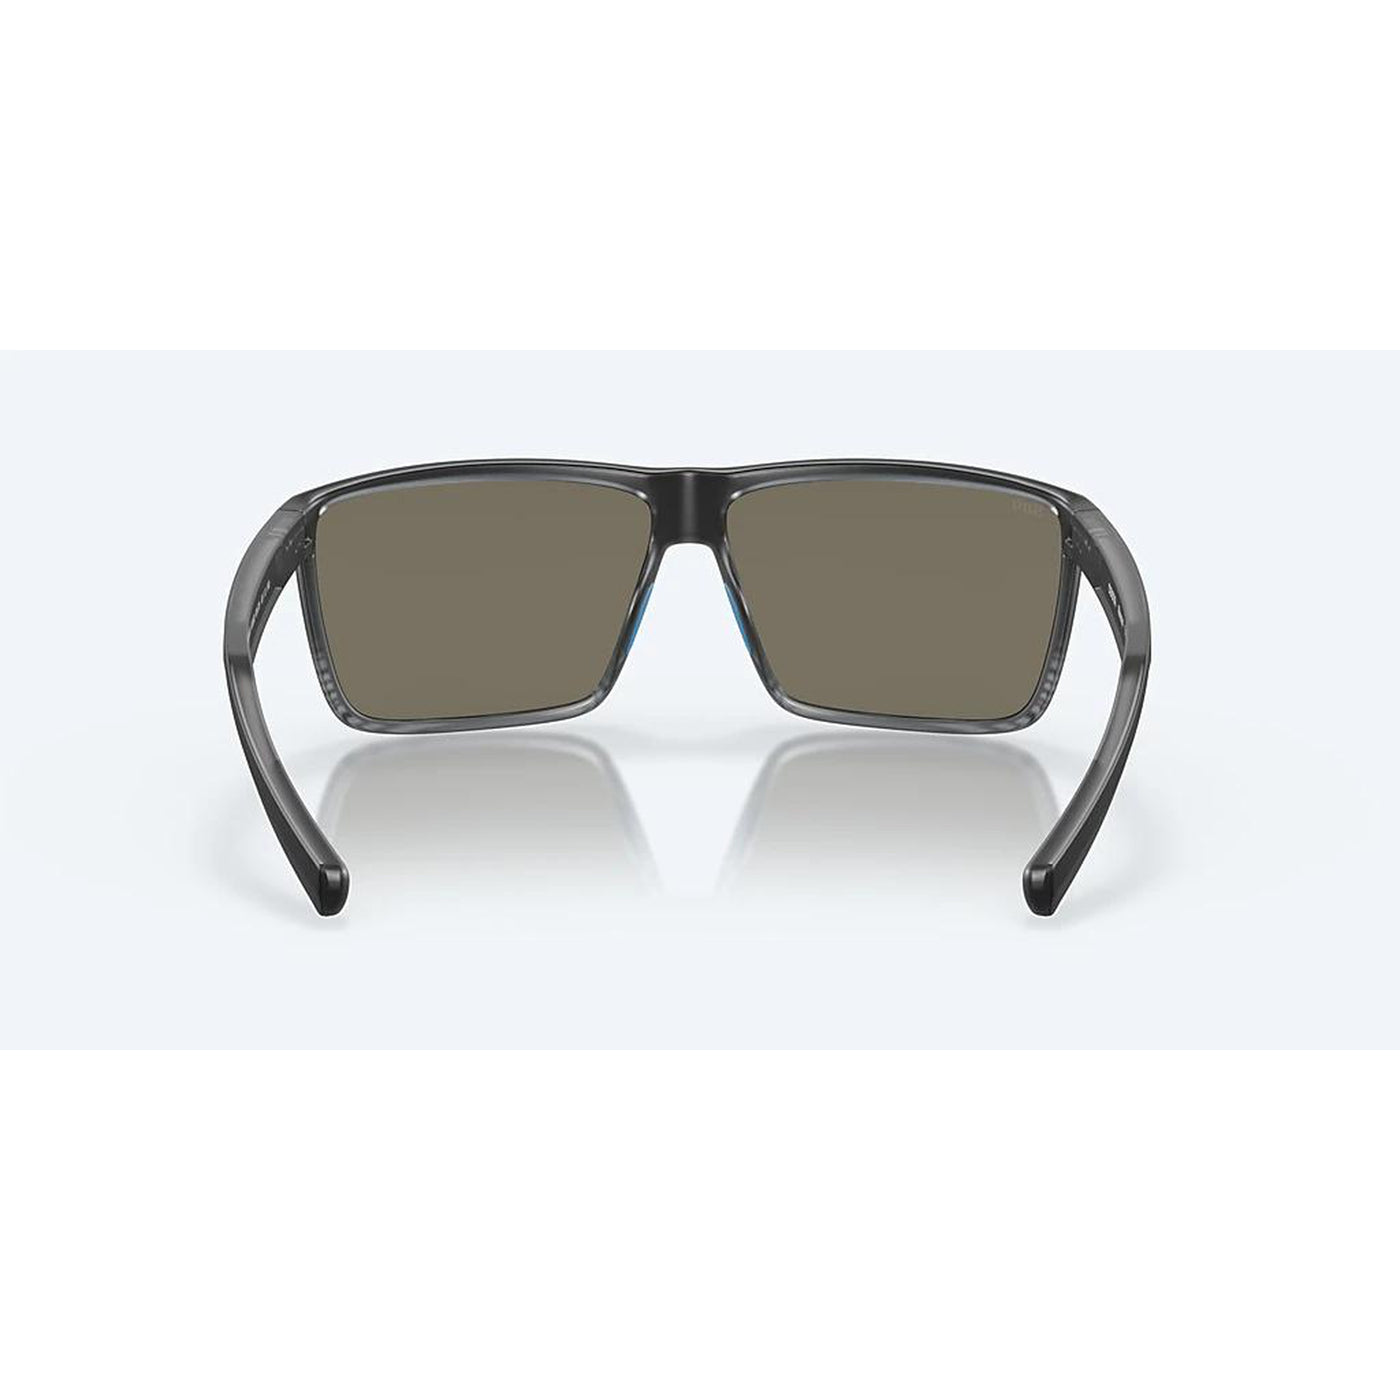 Costa Rincon-Sunglasses-Topline Eyewear